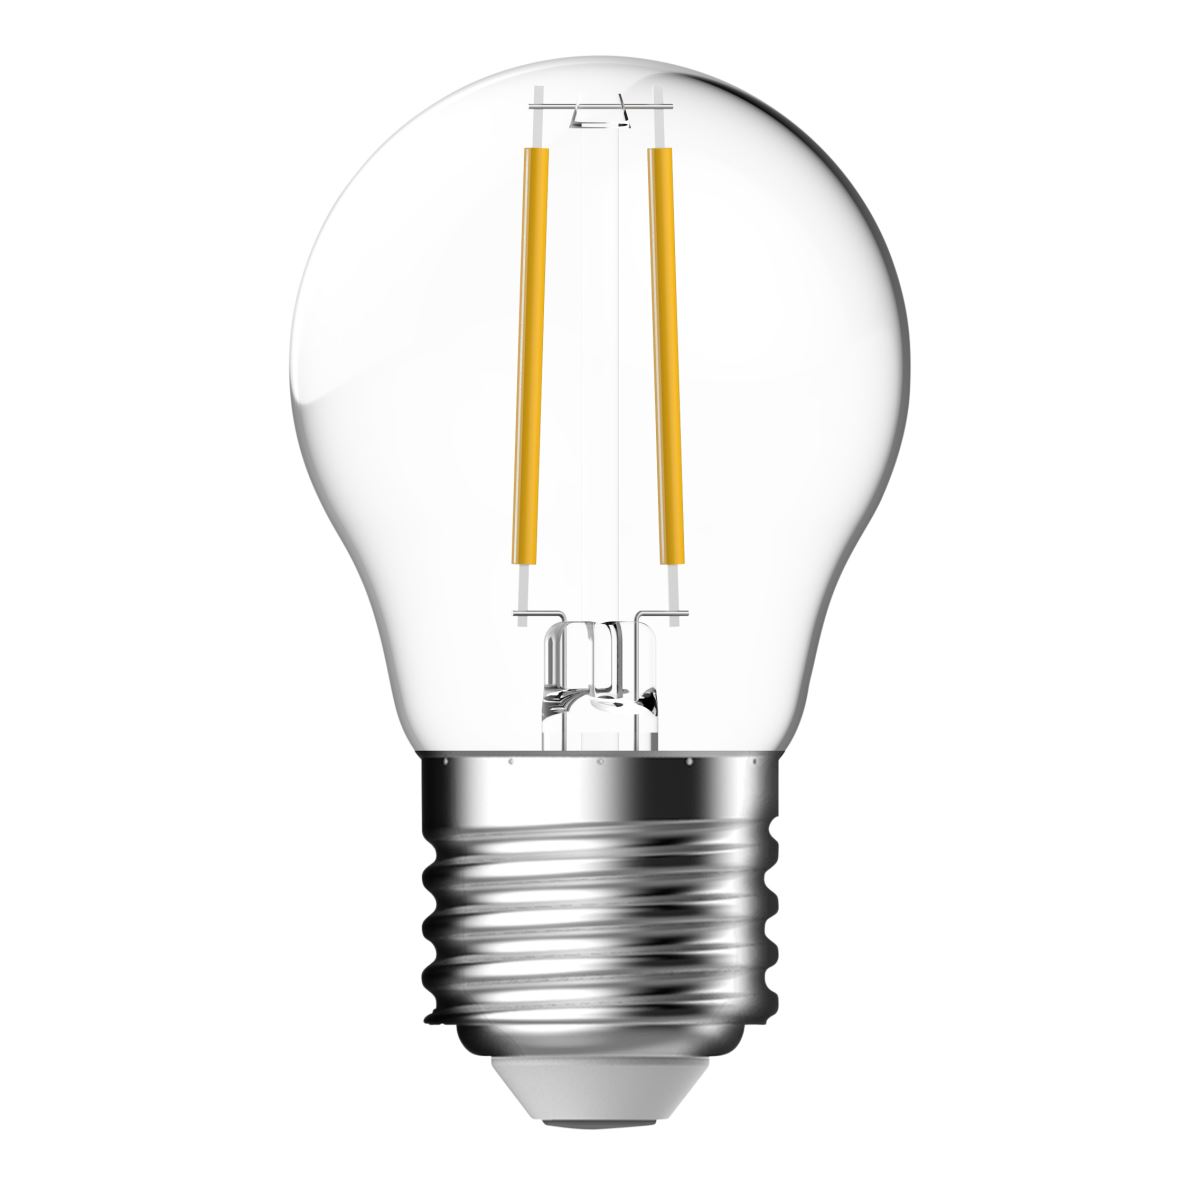 Nordlux Energetic LED Leuchtmittel E27 G45 Filament klar 470lm 4000K 4W 80Ra 360° 4,5x4,5x7,9cm von Energetic